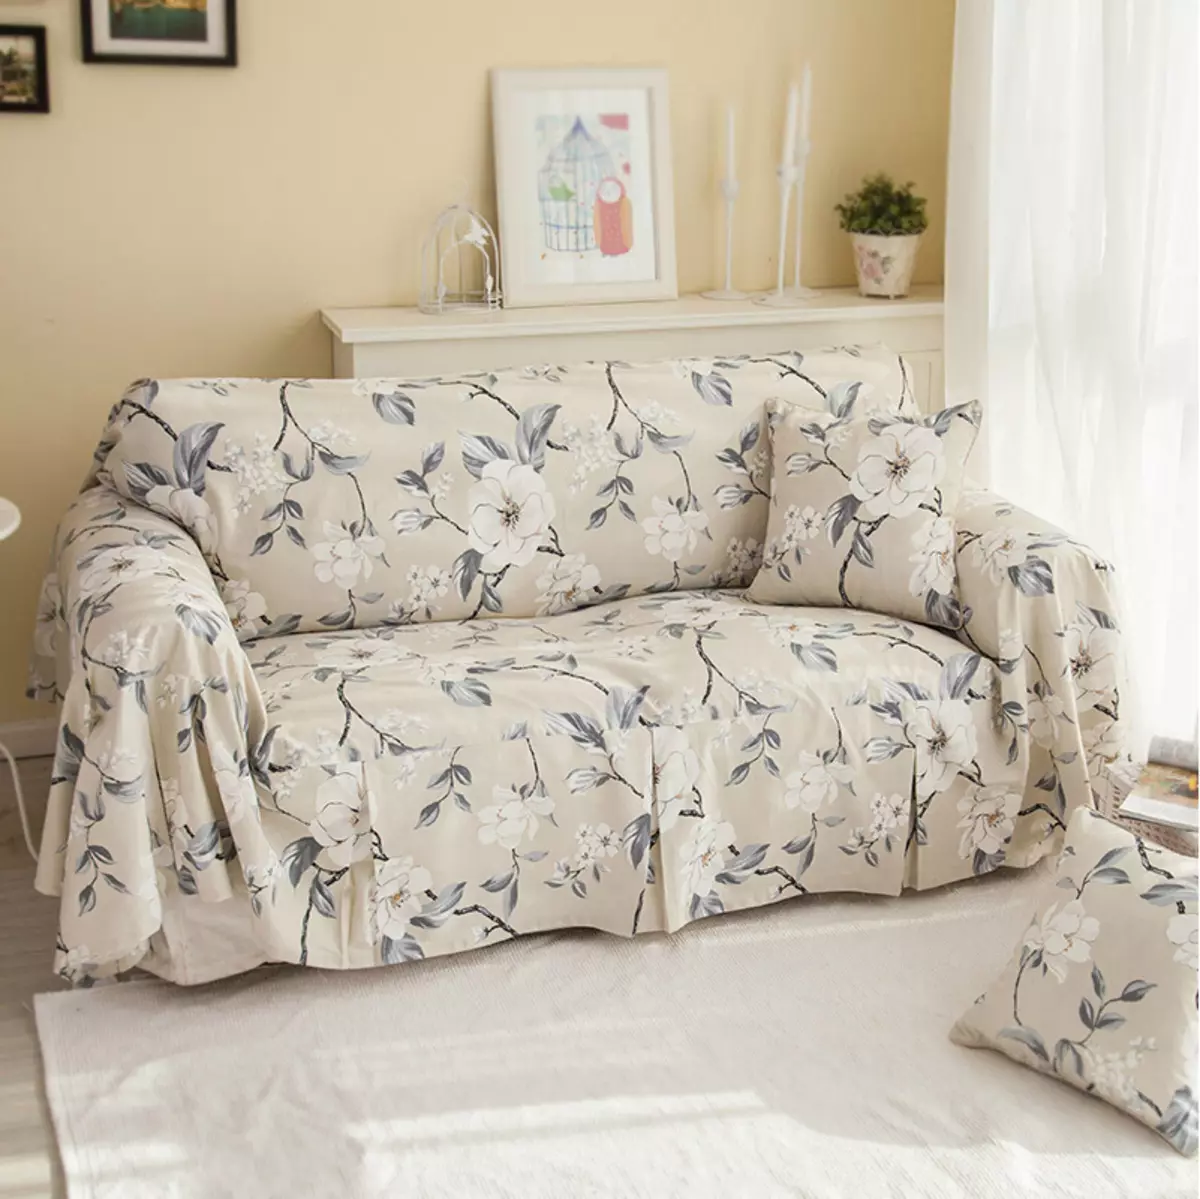 ସୋଫାବେଡ IKEA ଉପରେ କେସ୍: armrests ବିନା କଣ sofas ପାଇଁ bedspreads, ବିଶ୍ଵସ୍ତରୀୟ ଢ଼ାଲ ଓ ଅନ୍ୟାନ୍ୟ ବିକଳ୍ପ ଚୟନକୁ 8963_39